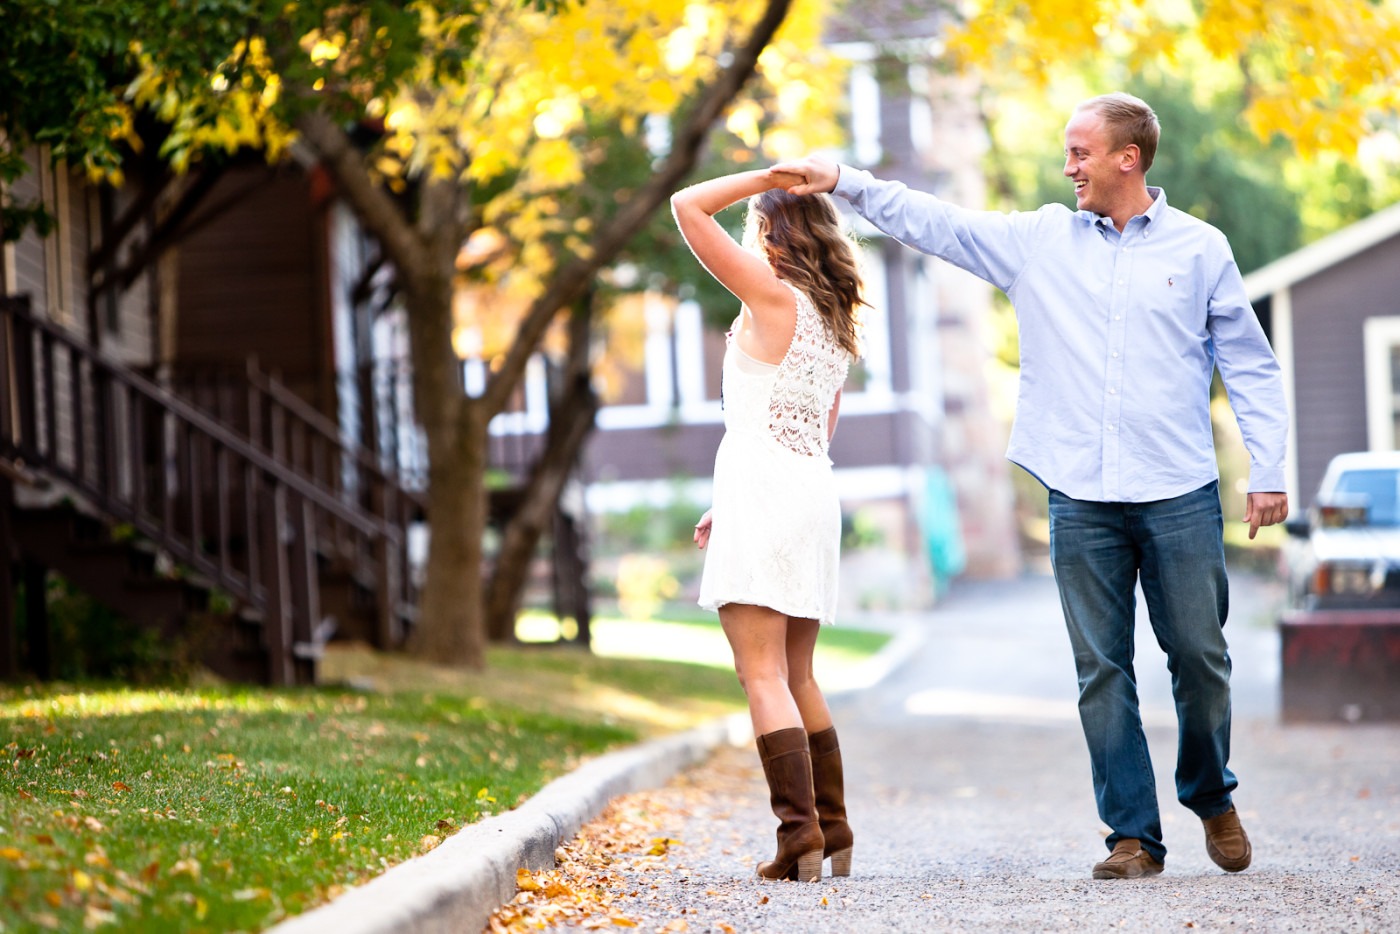 a man dances with a woman in a dress while walking down a suburban street